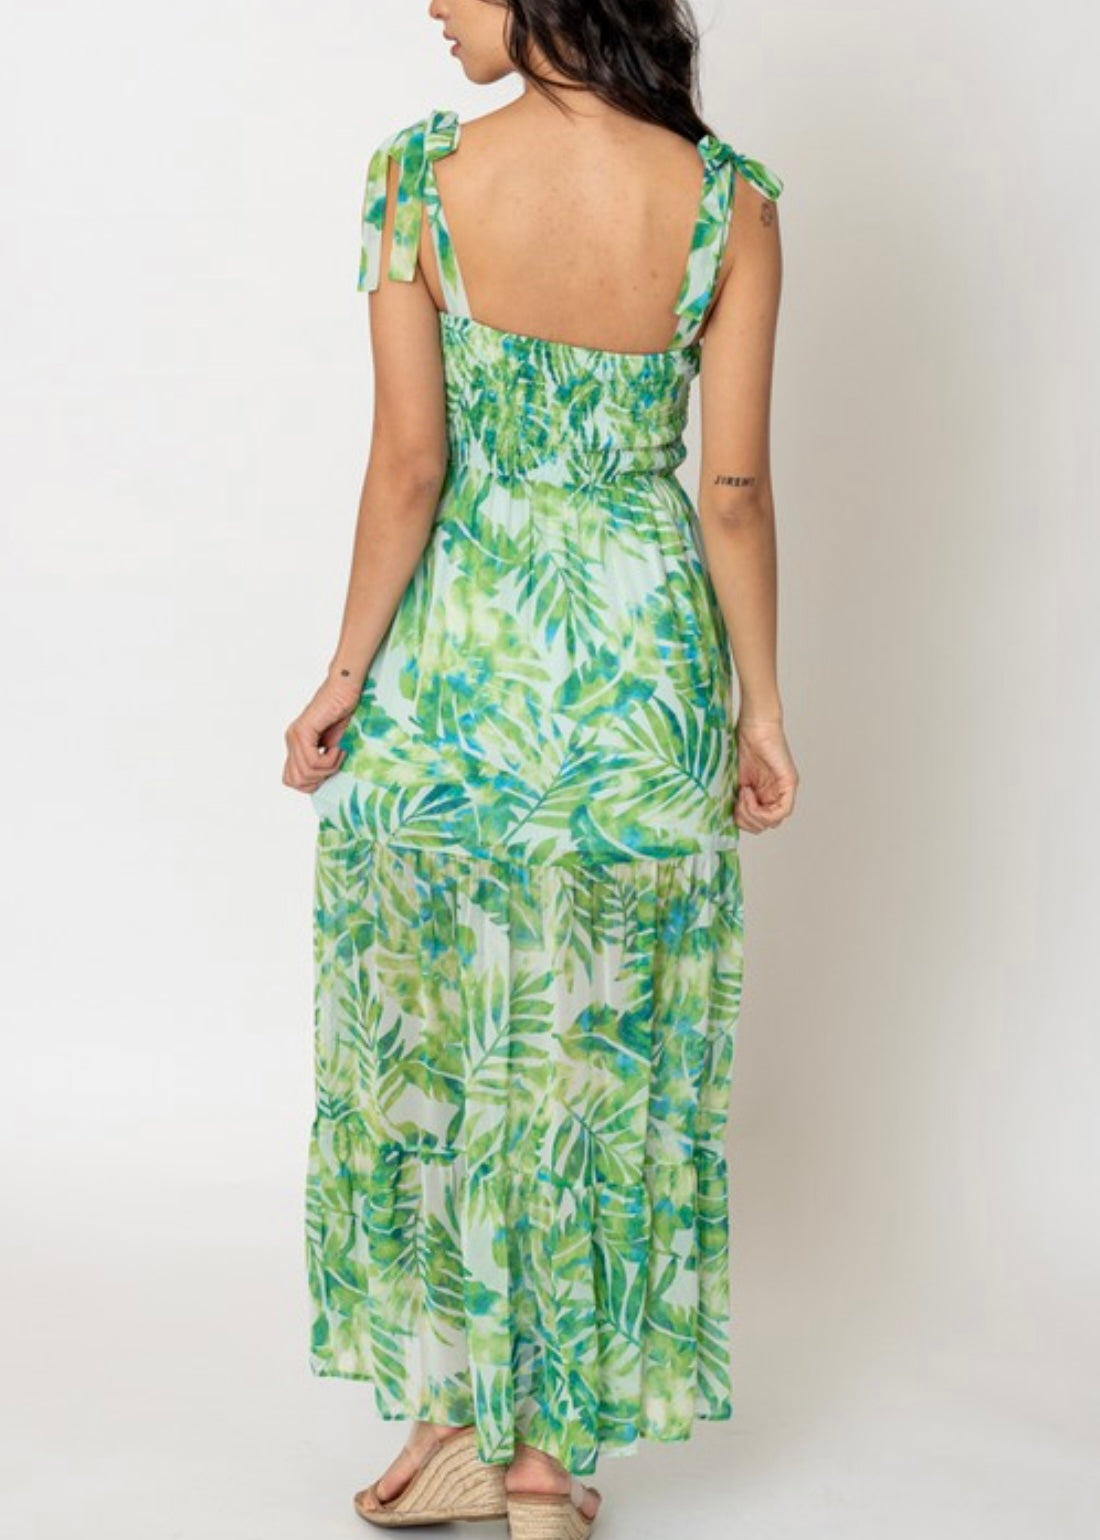 The green tropical maxi dress